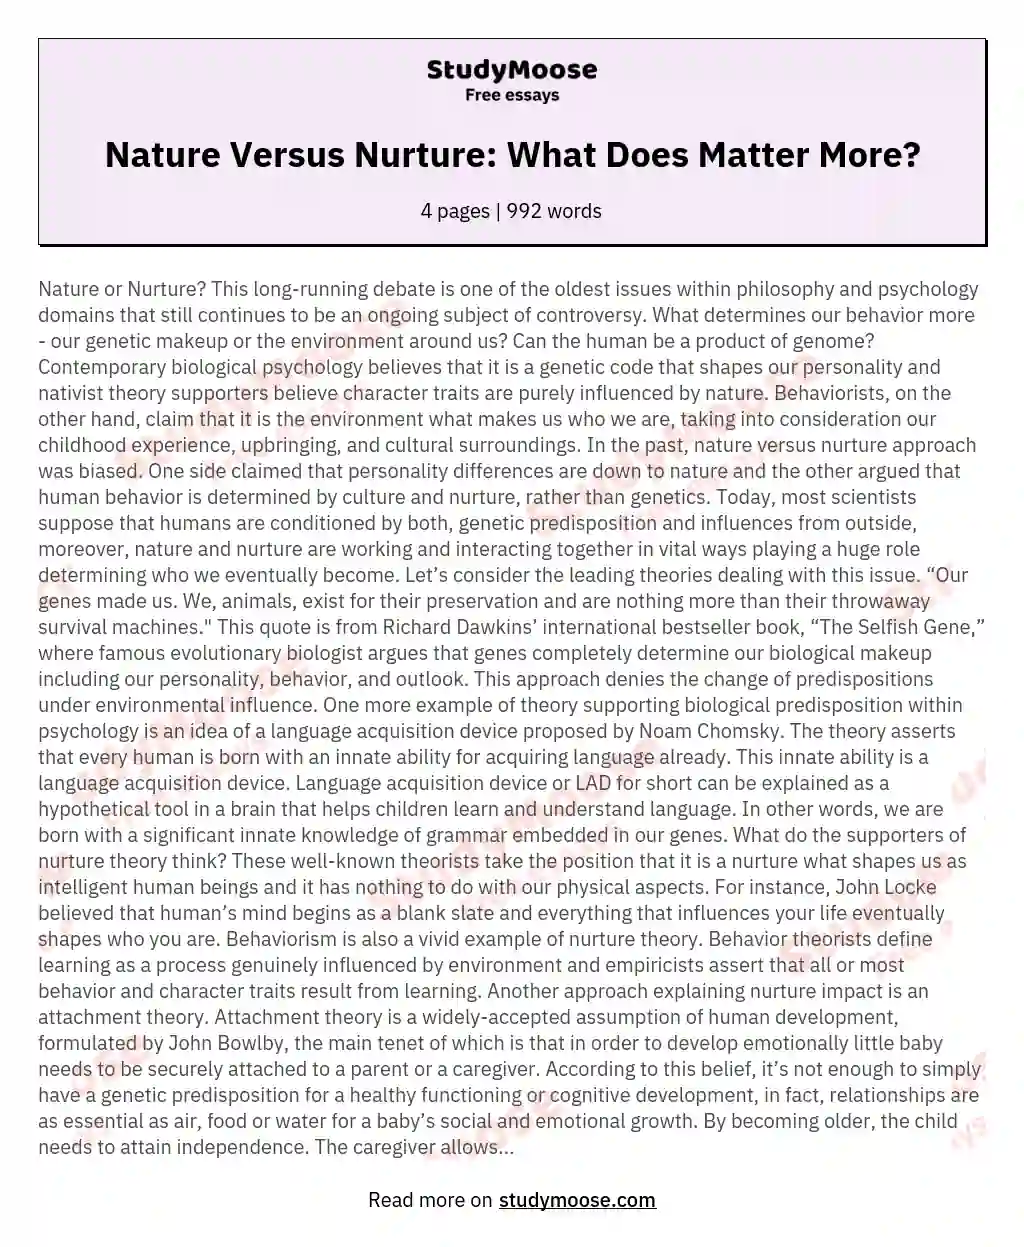 Nature Versus Nurture: What Does Matter More?